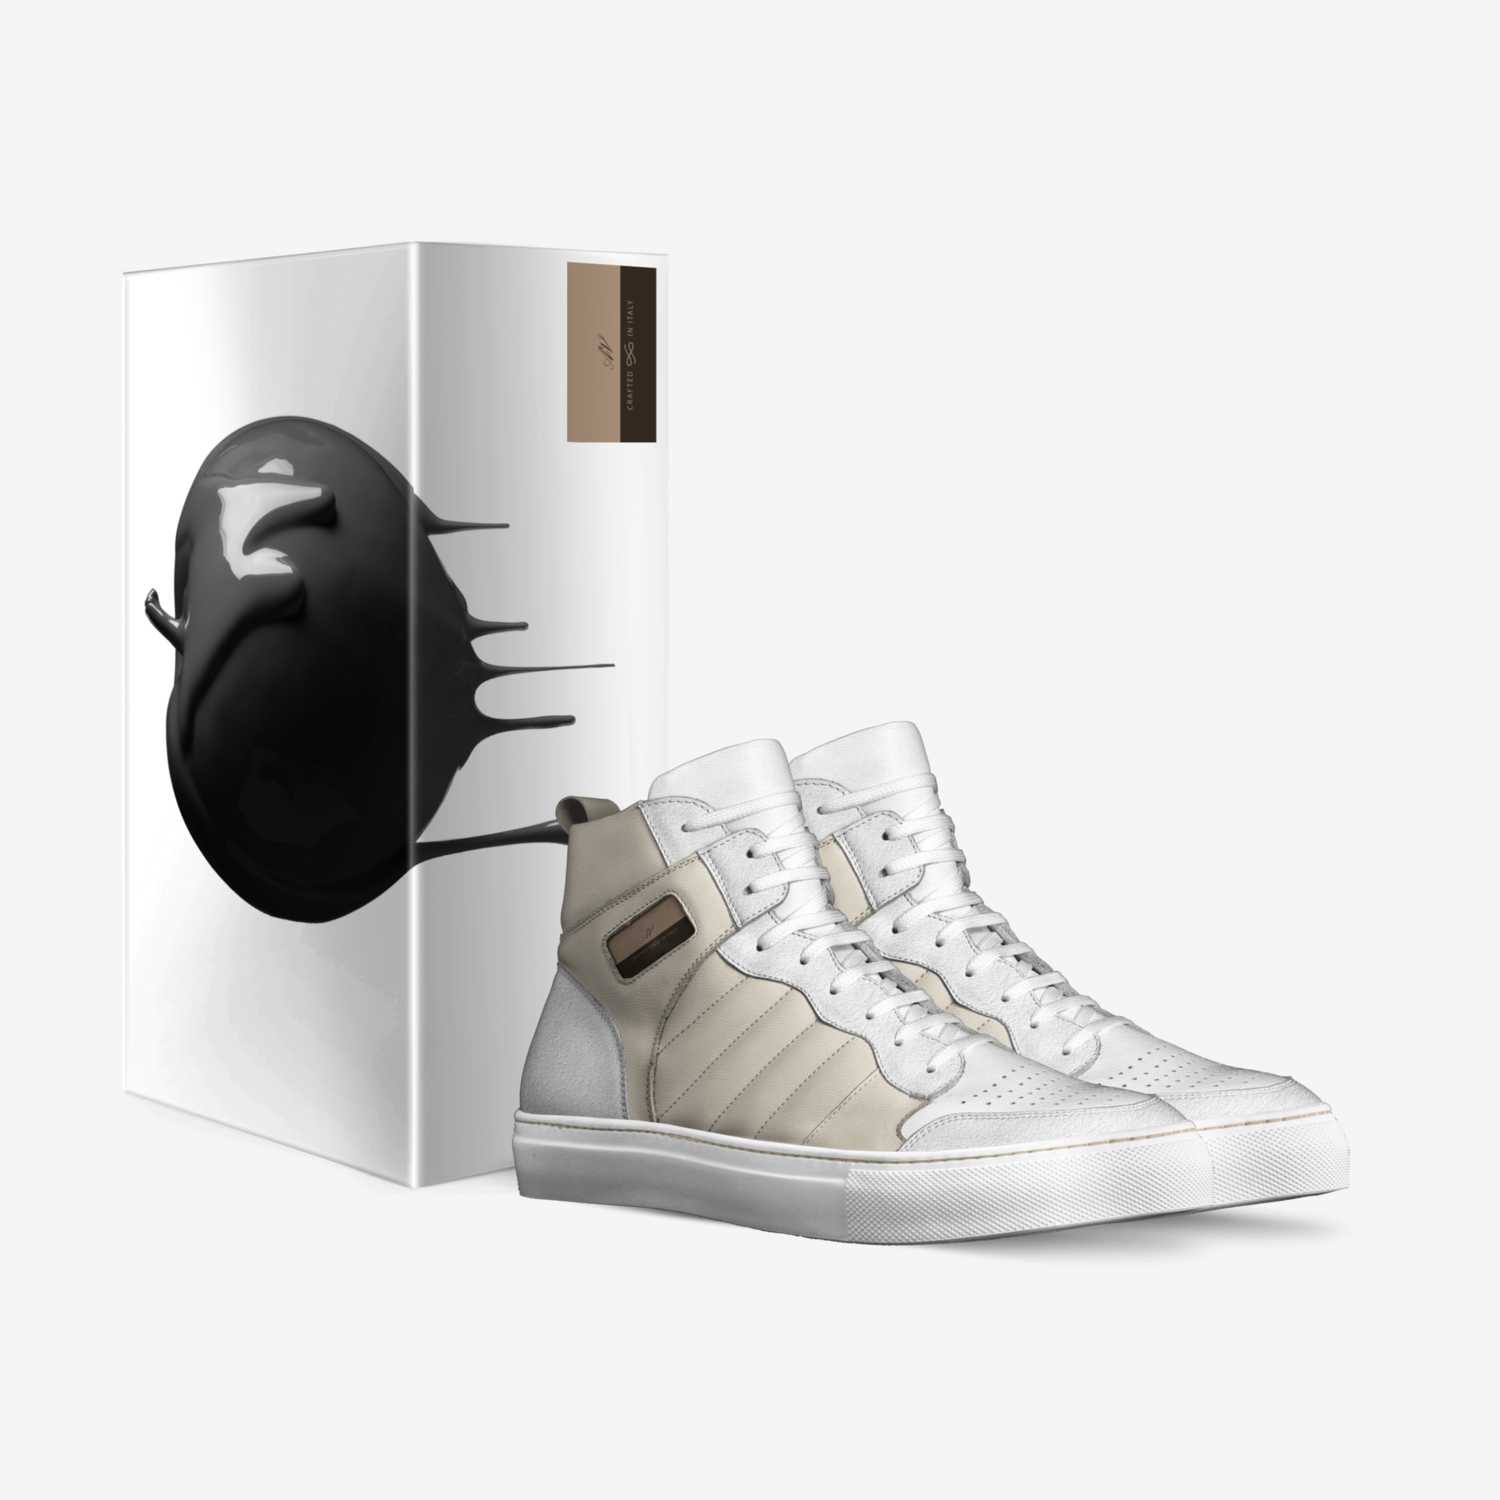 AV custom made in Italy shoes by Fernando Avitia | Box view